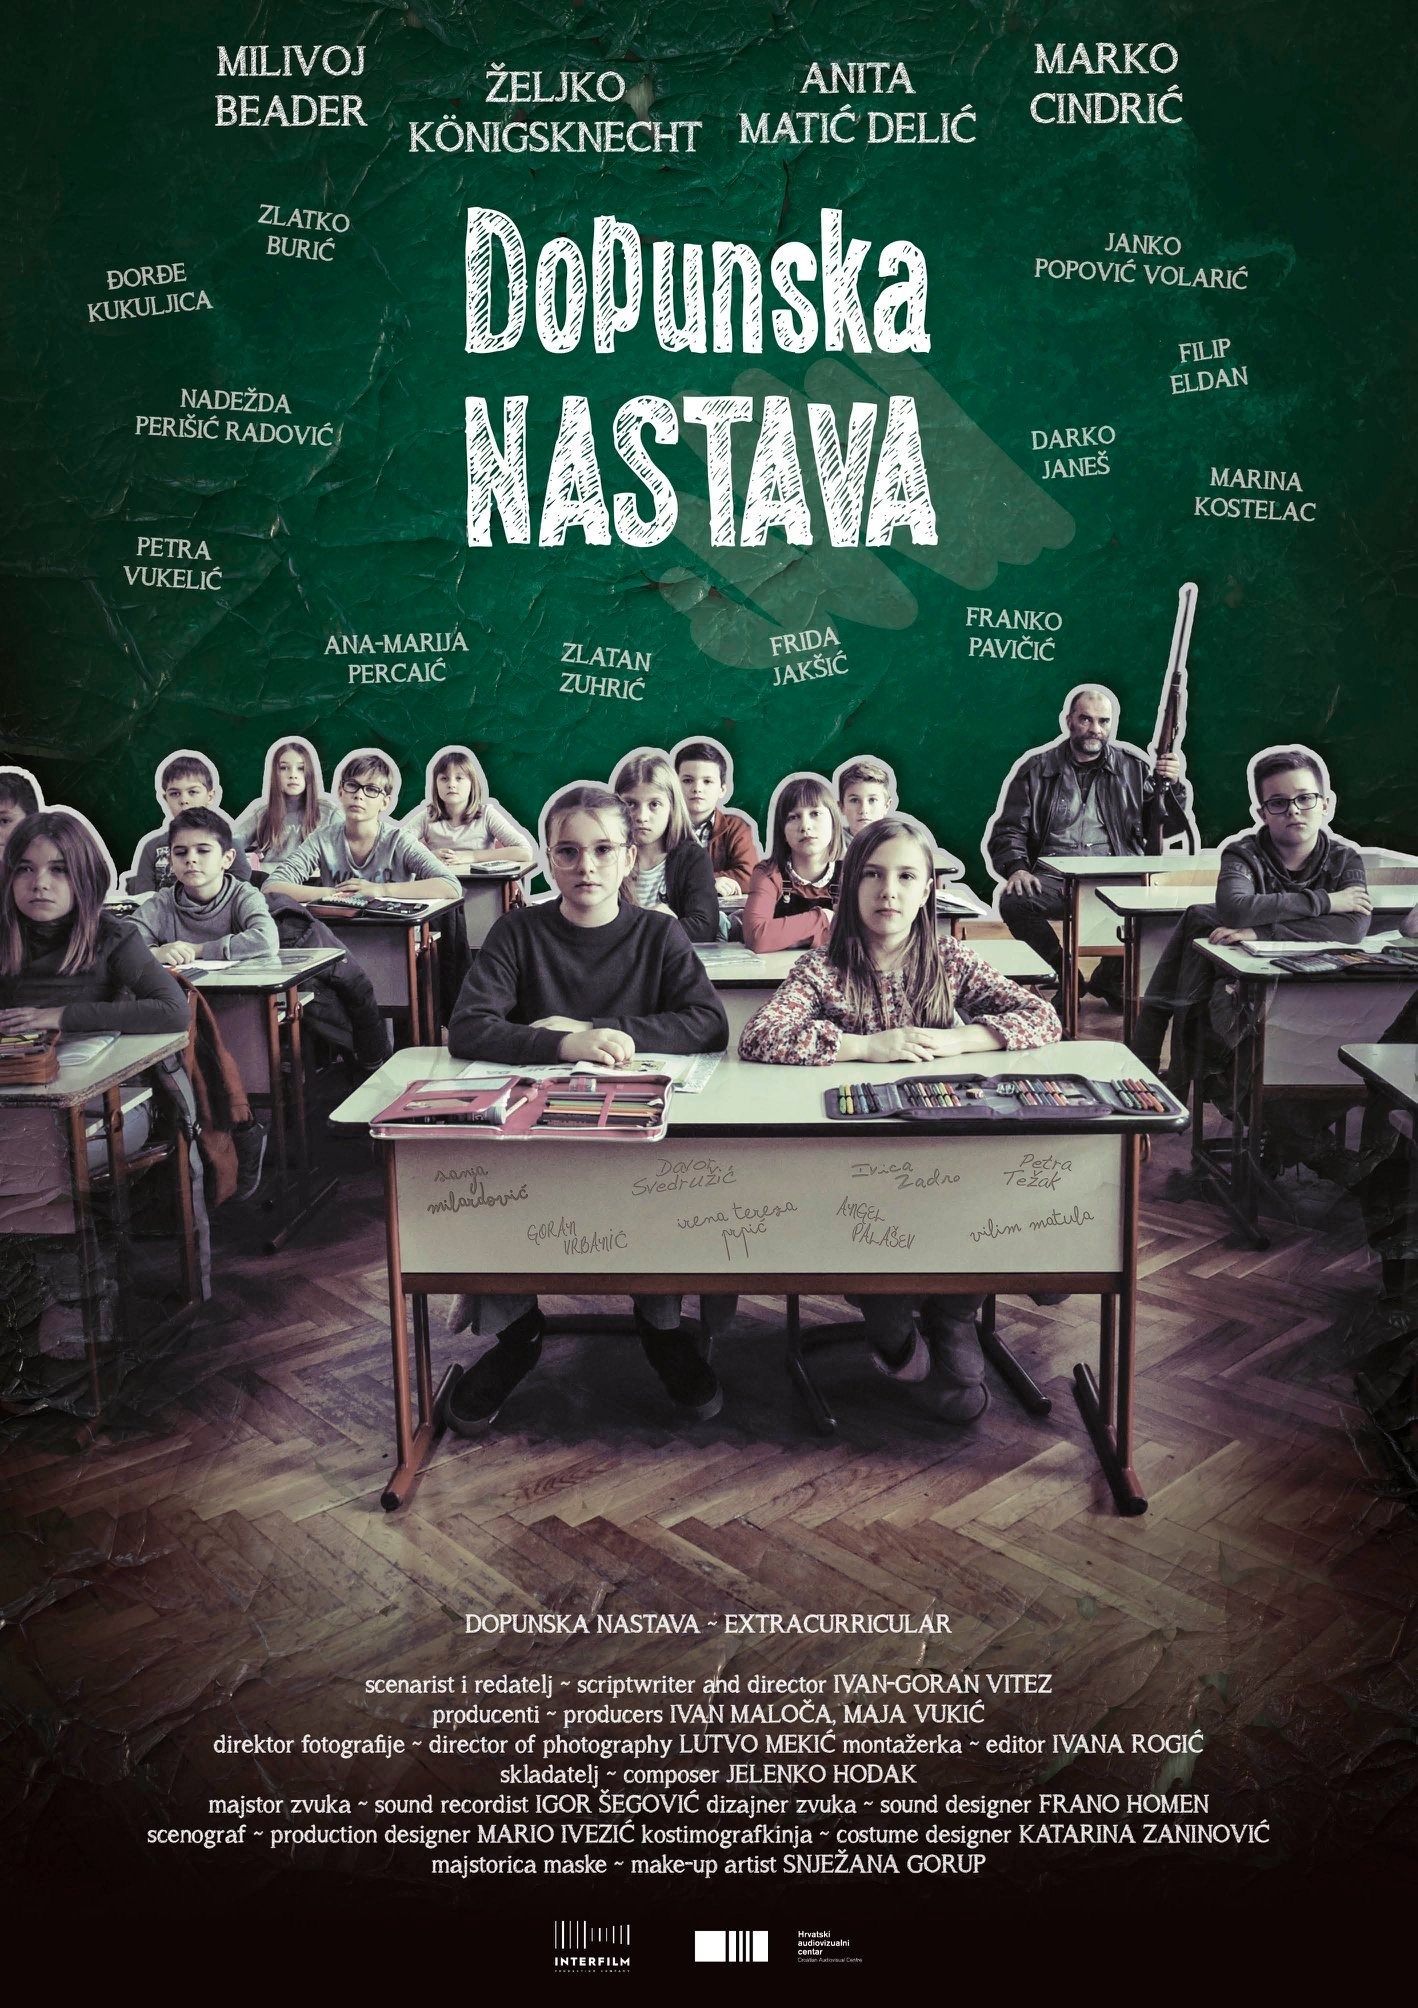 Mega Sized Movie Poster Image for Dopunska nastava 